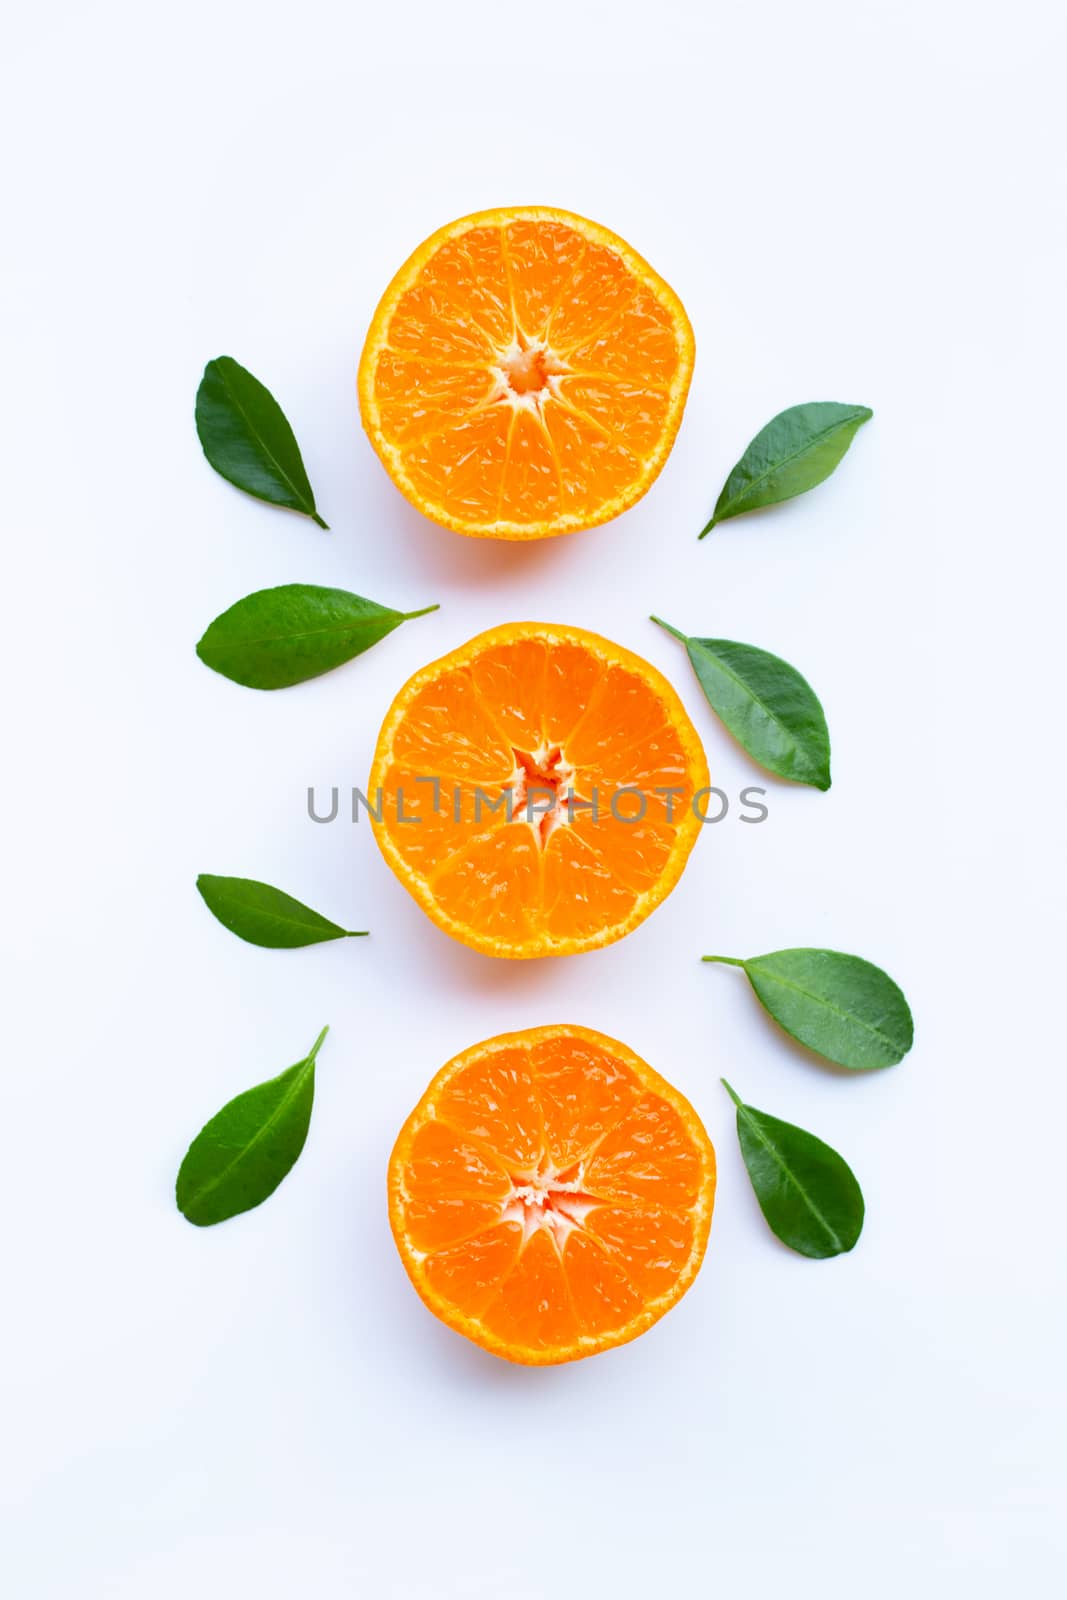 Fresh orange citrus fruit with green leaves on white. by Bowonpat